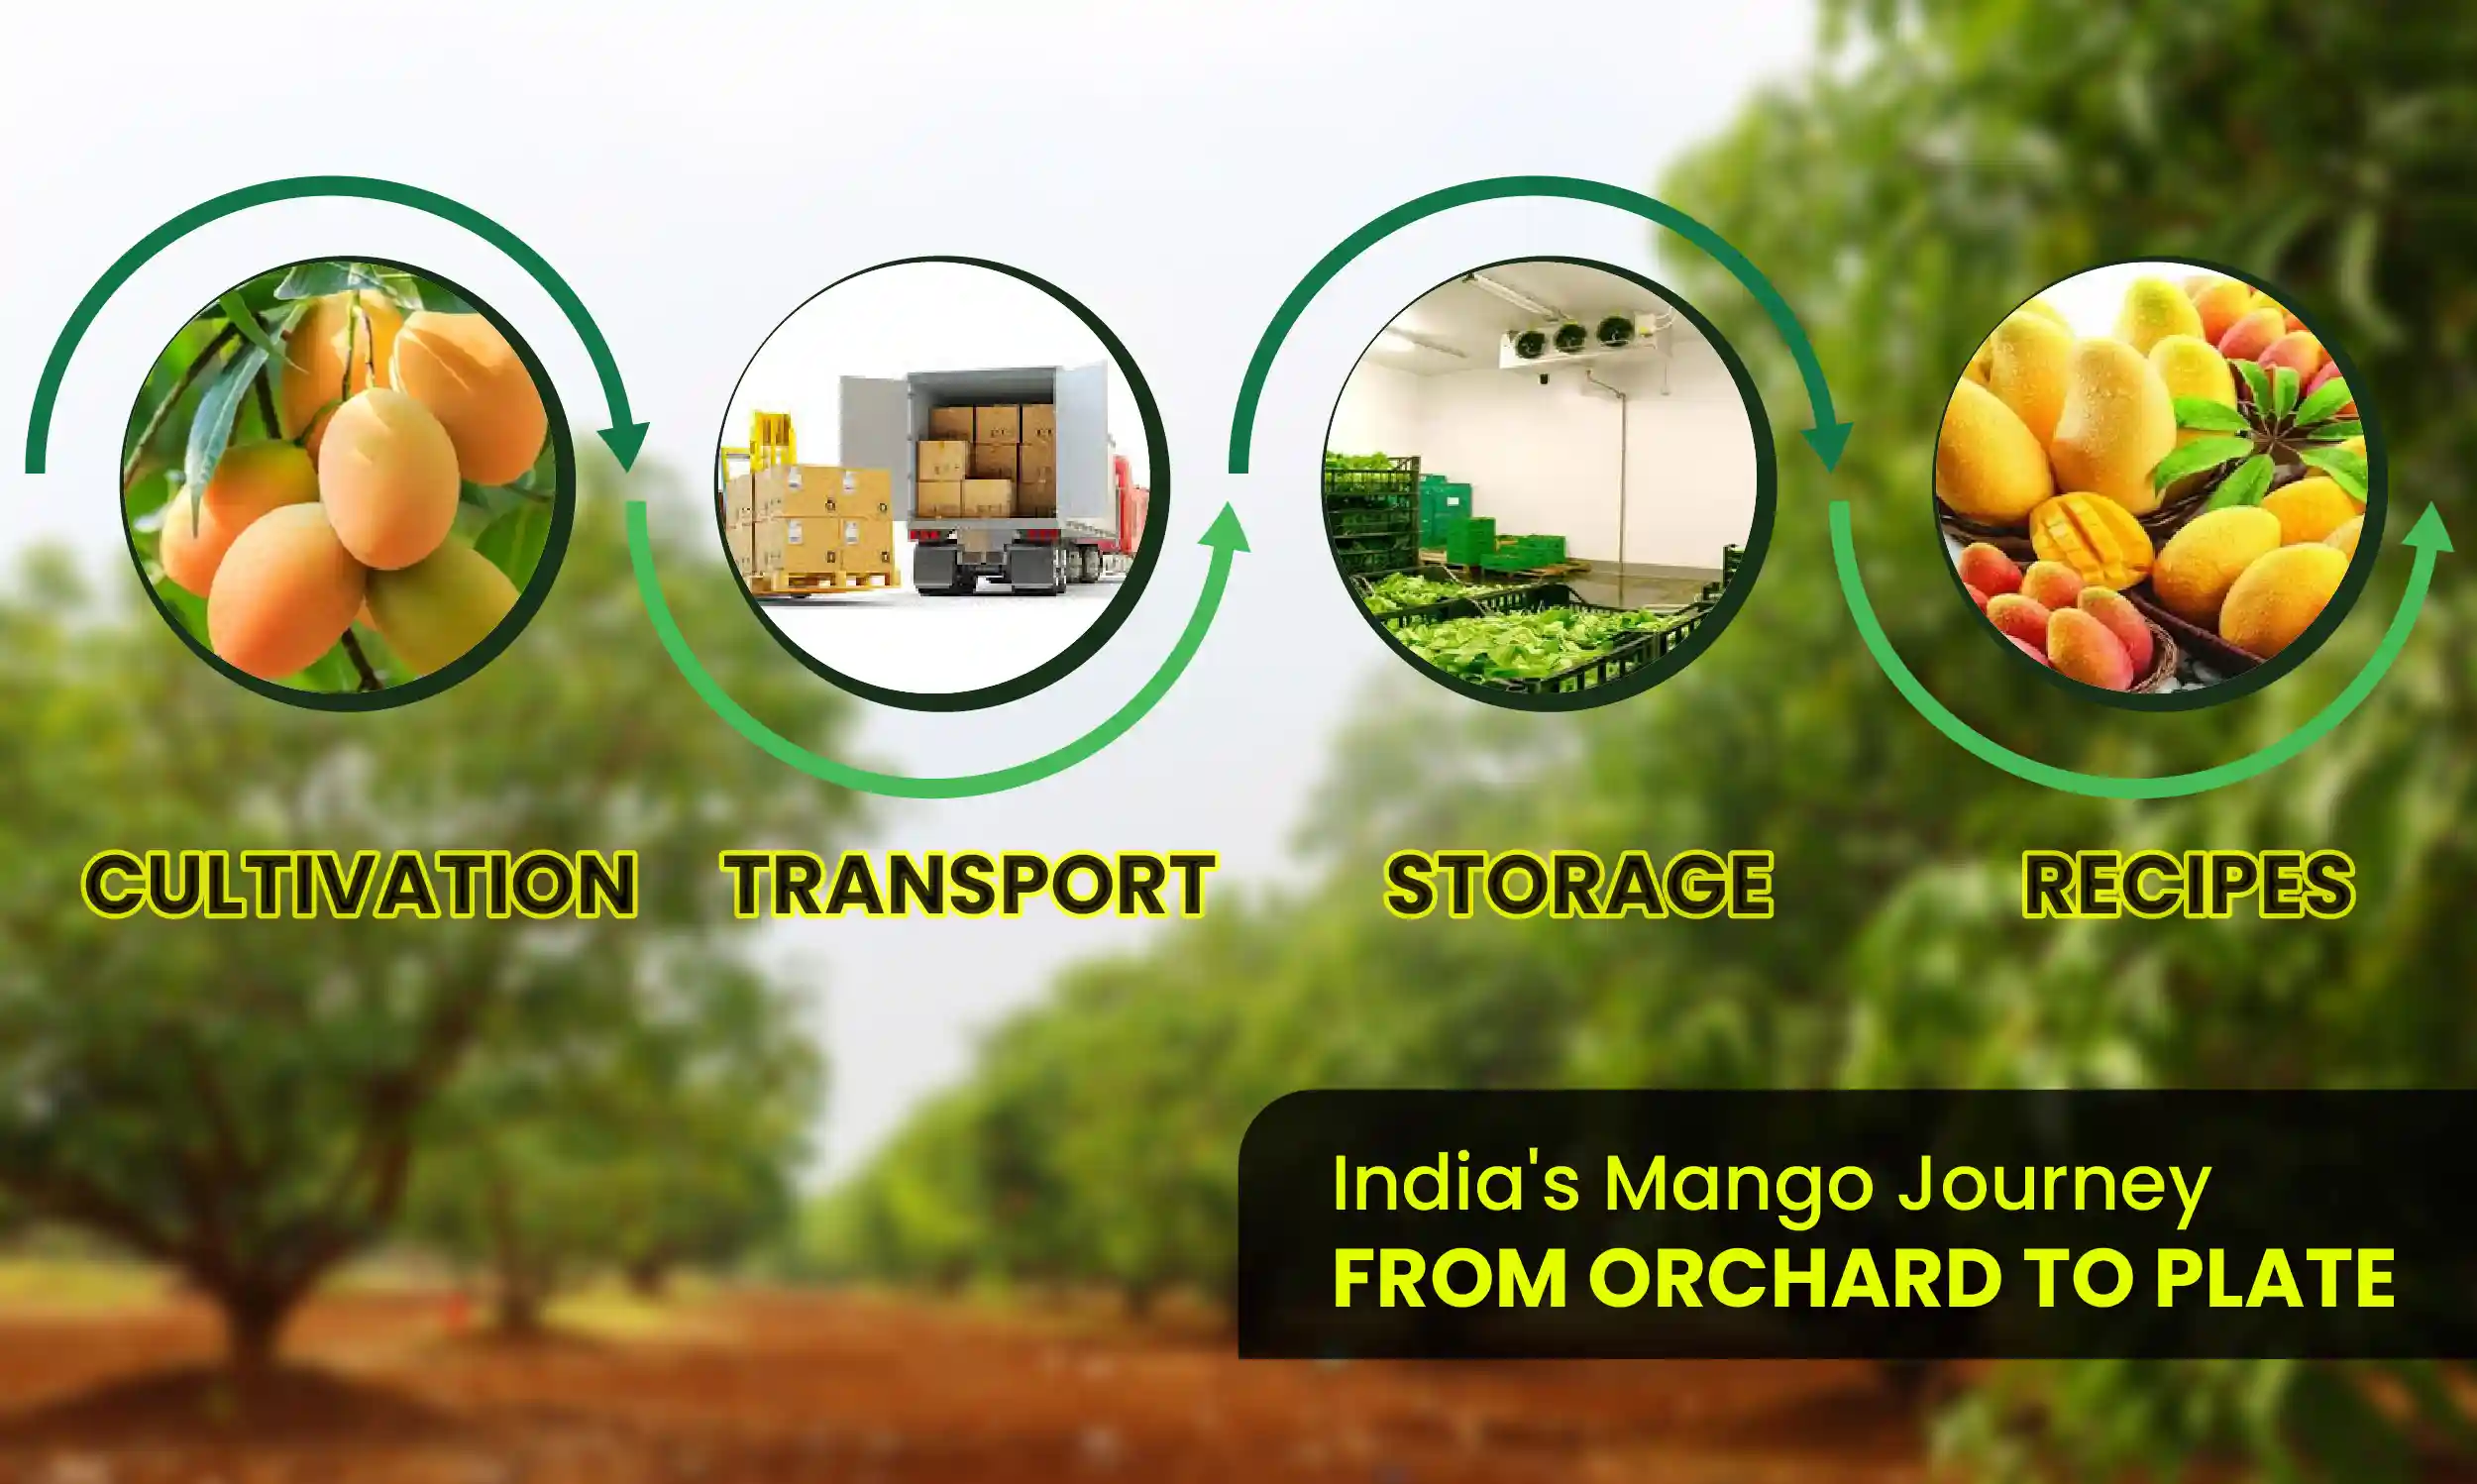 Mango Farmland Near Chennai